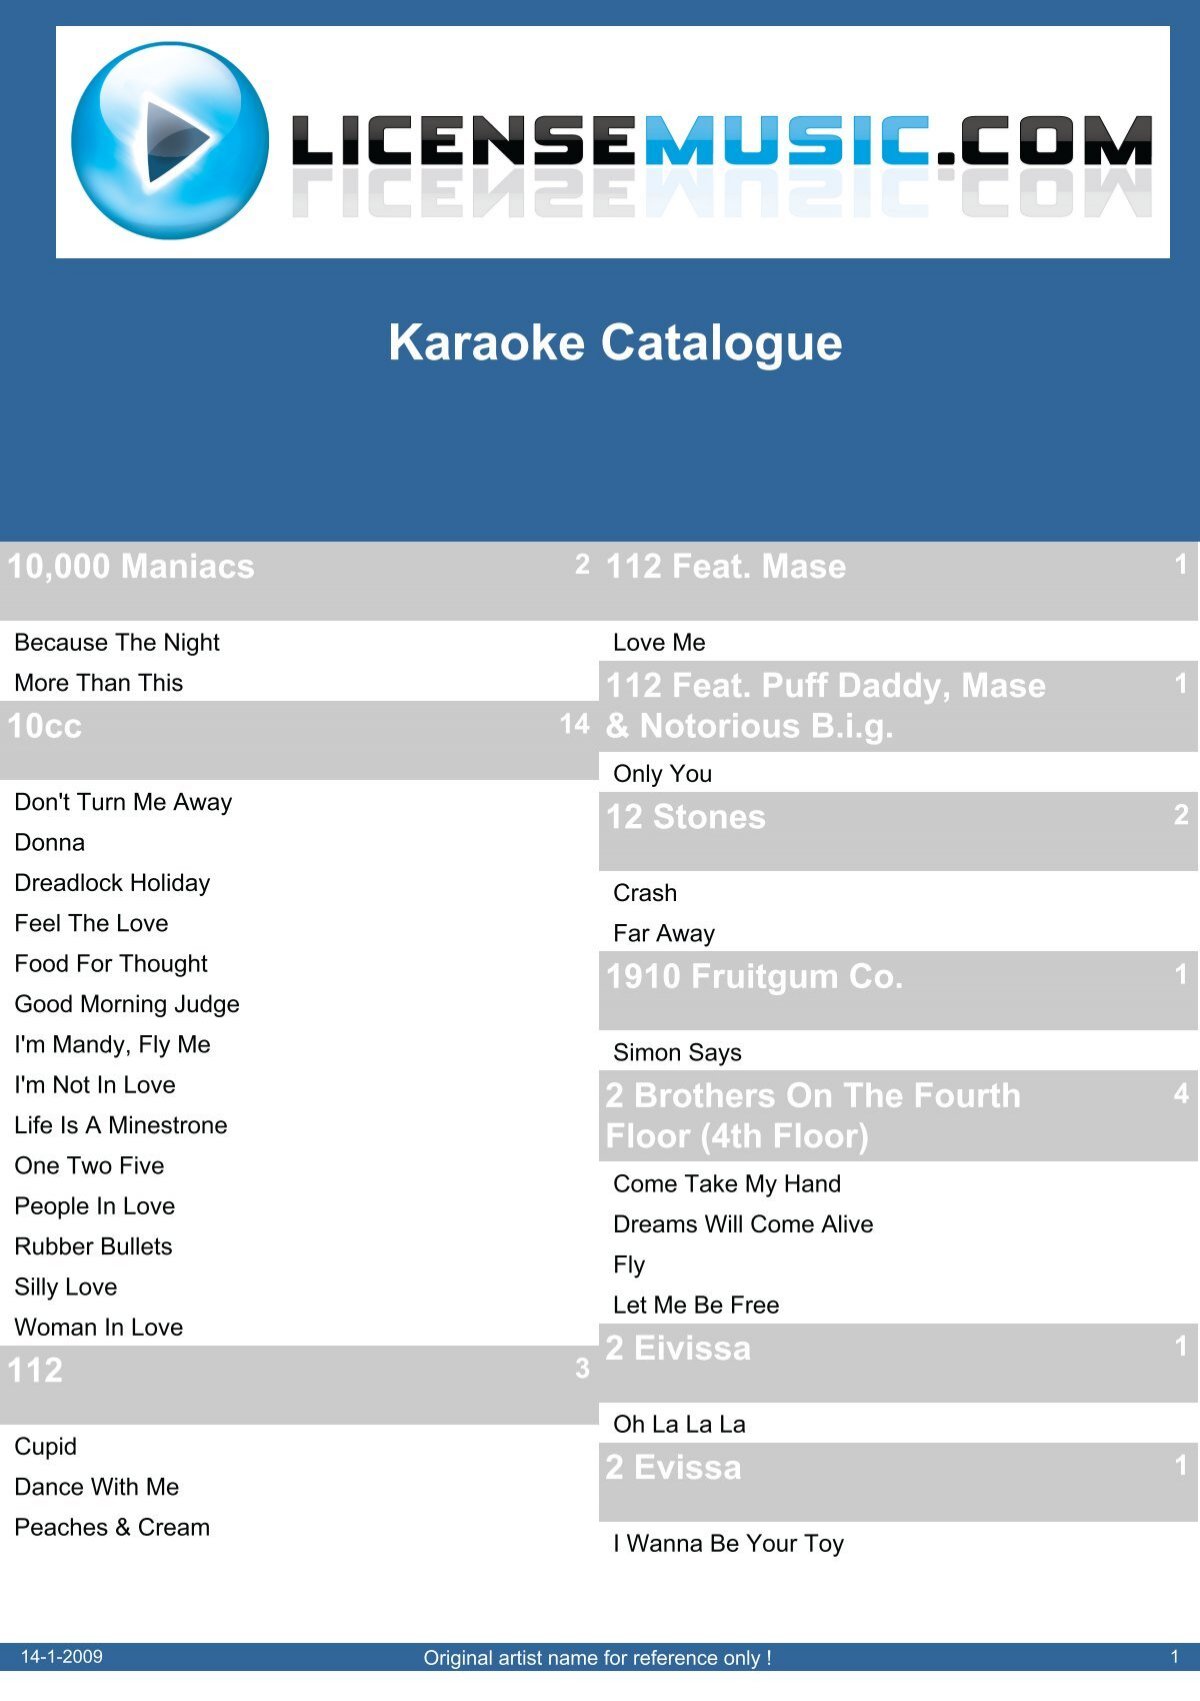 Karaoke Catalogue - Licensemusic